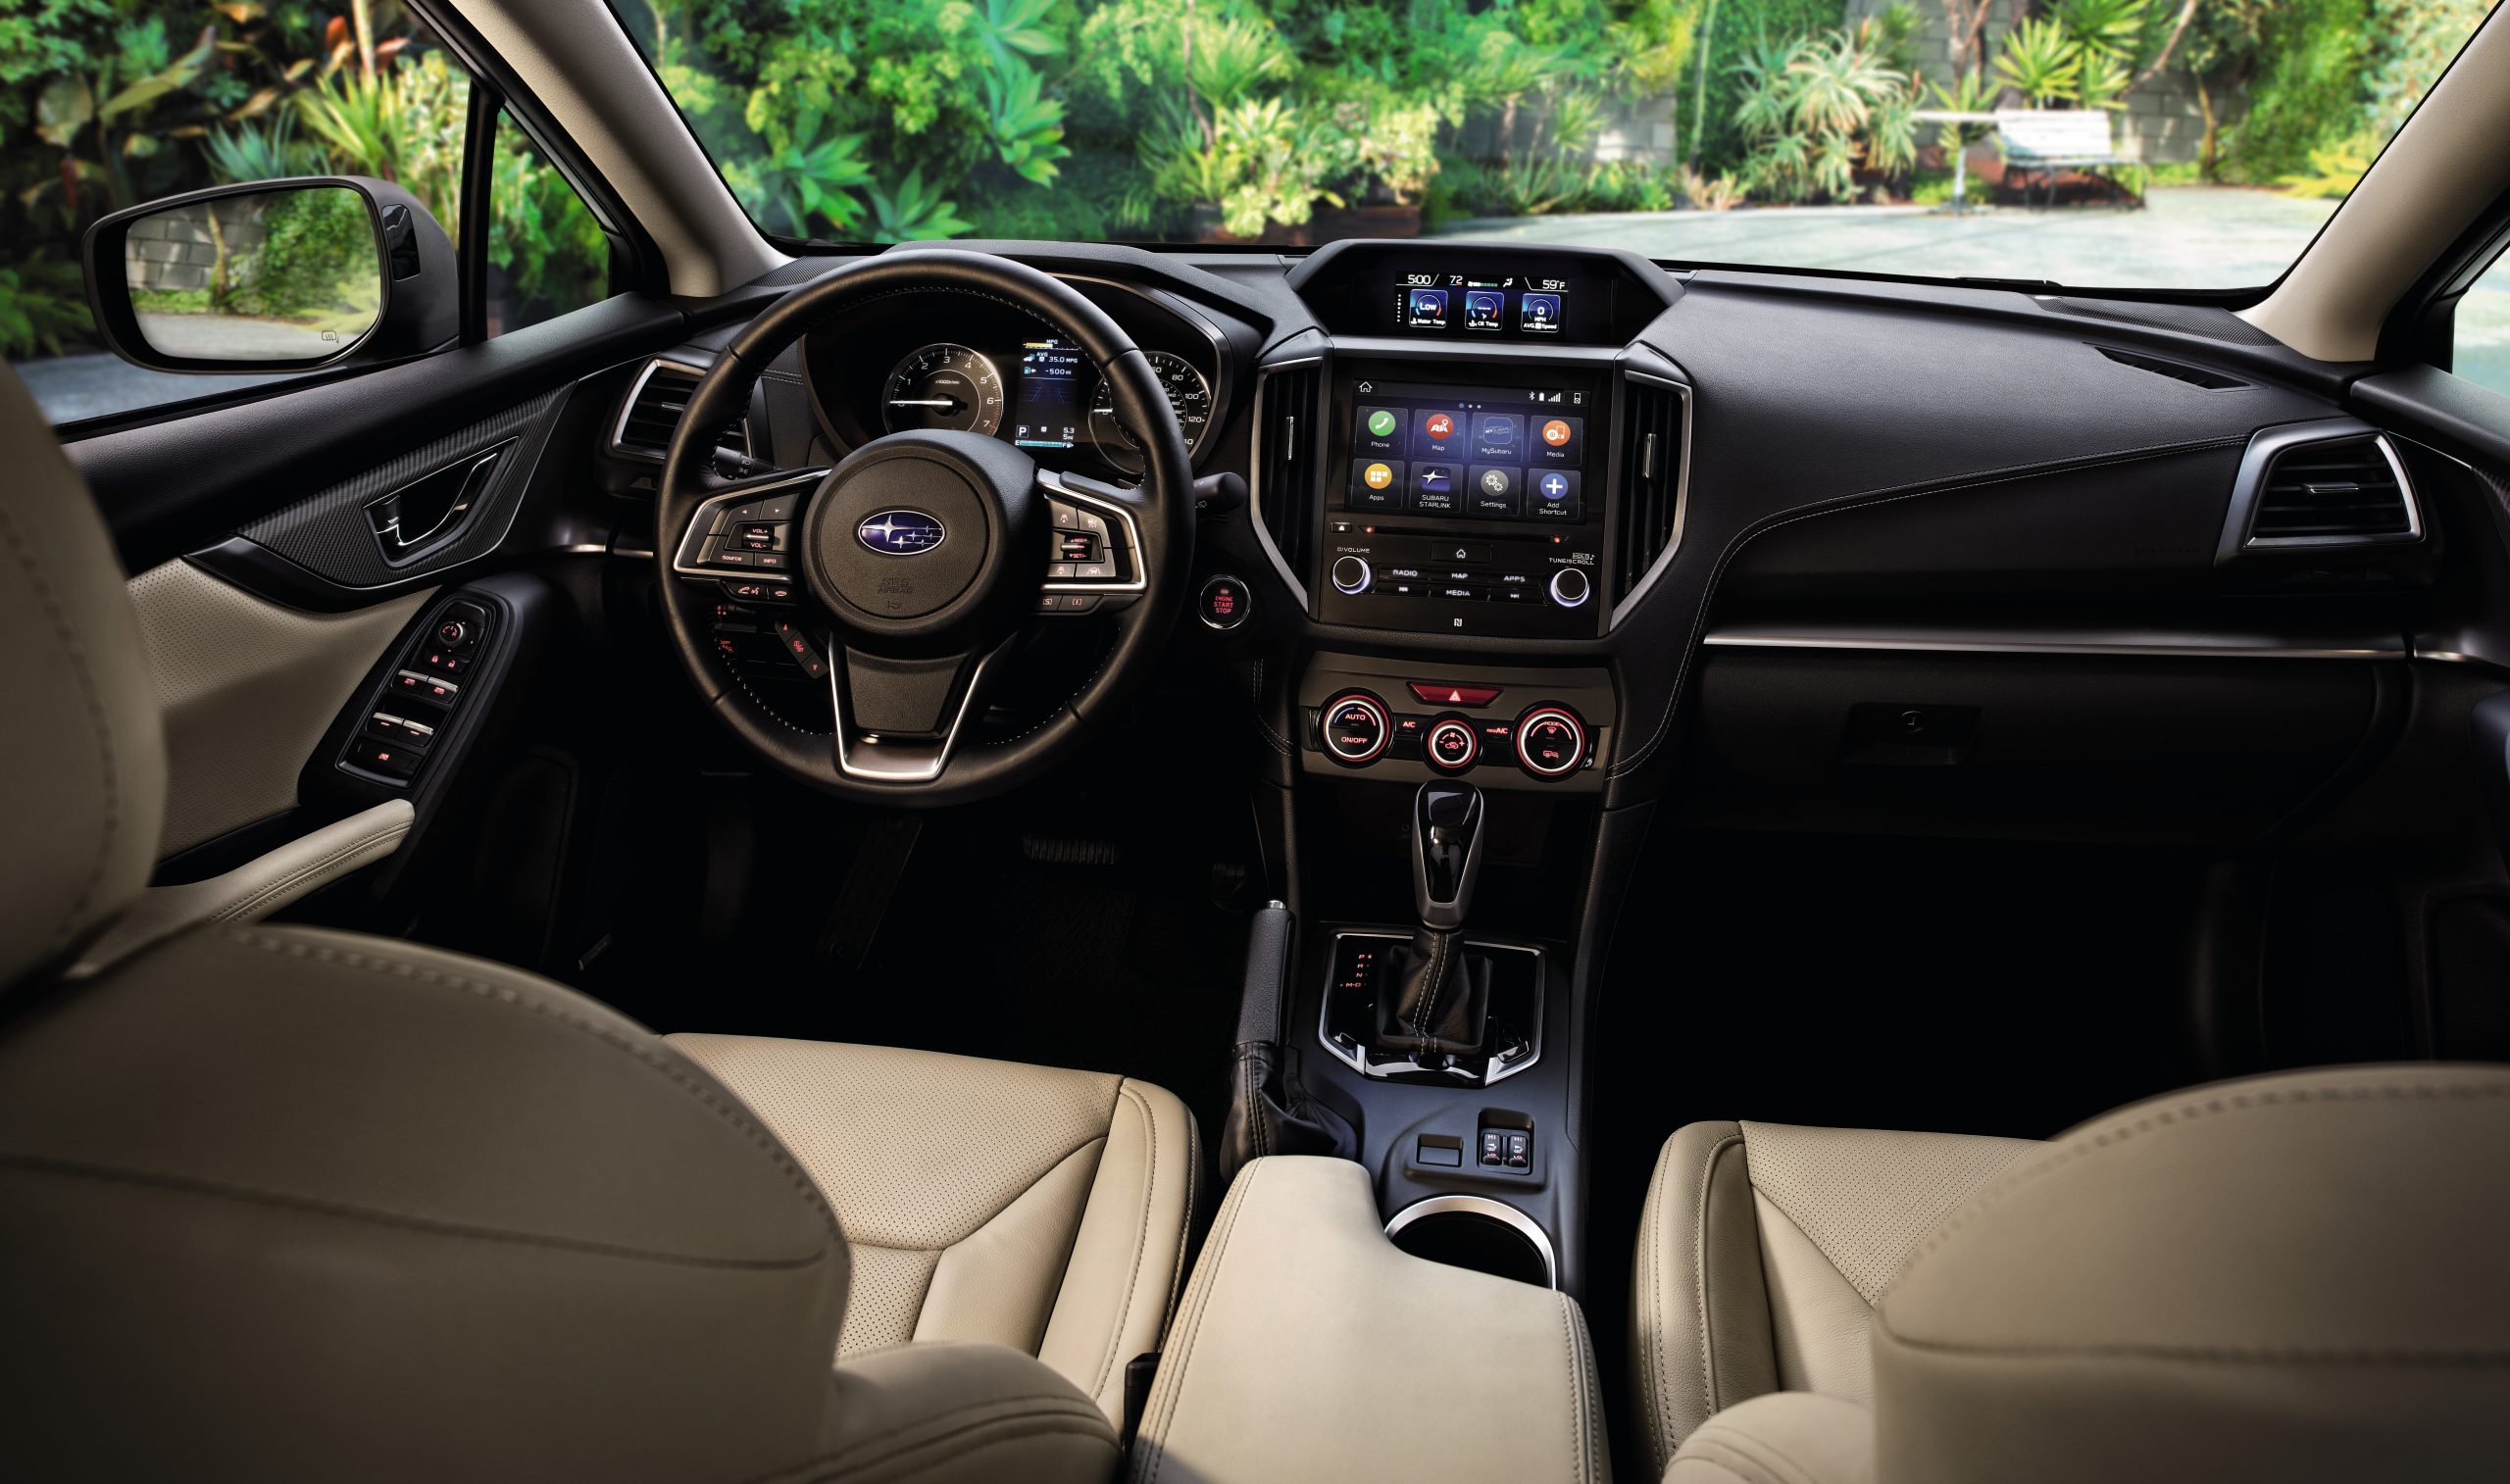 The interior of the new Subaru Impreza with tan leather seats